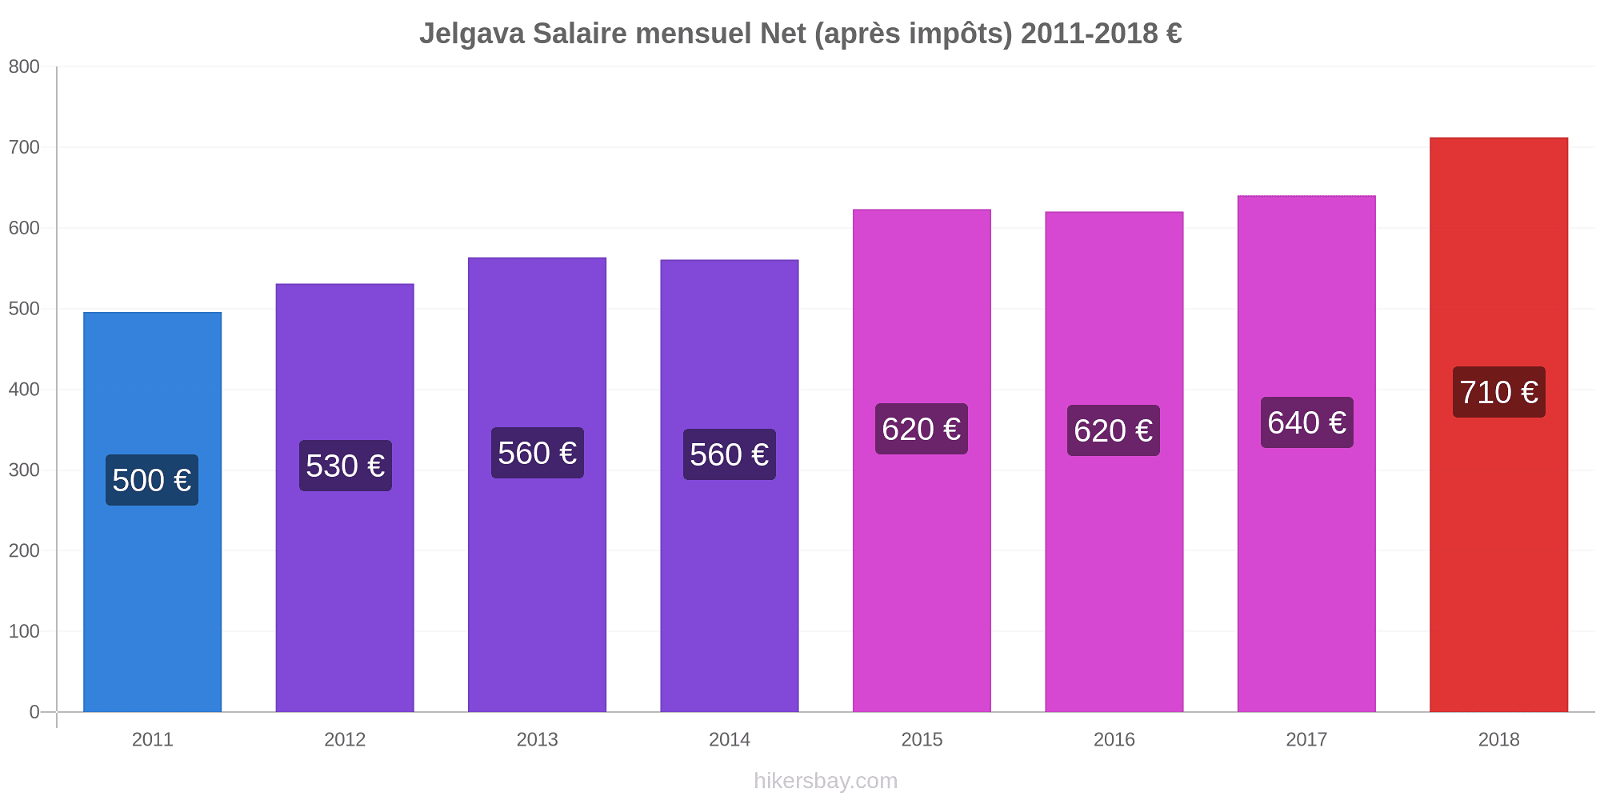 Jelgava changements de prix Salaire mensuel Net (après impôts) hikersbay.com